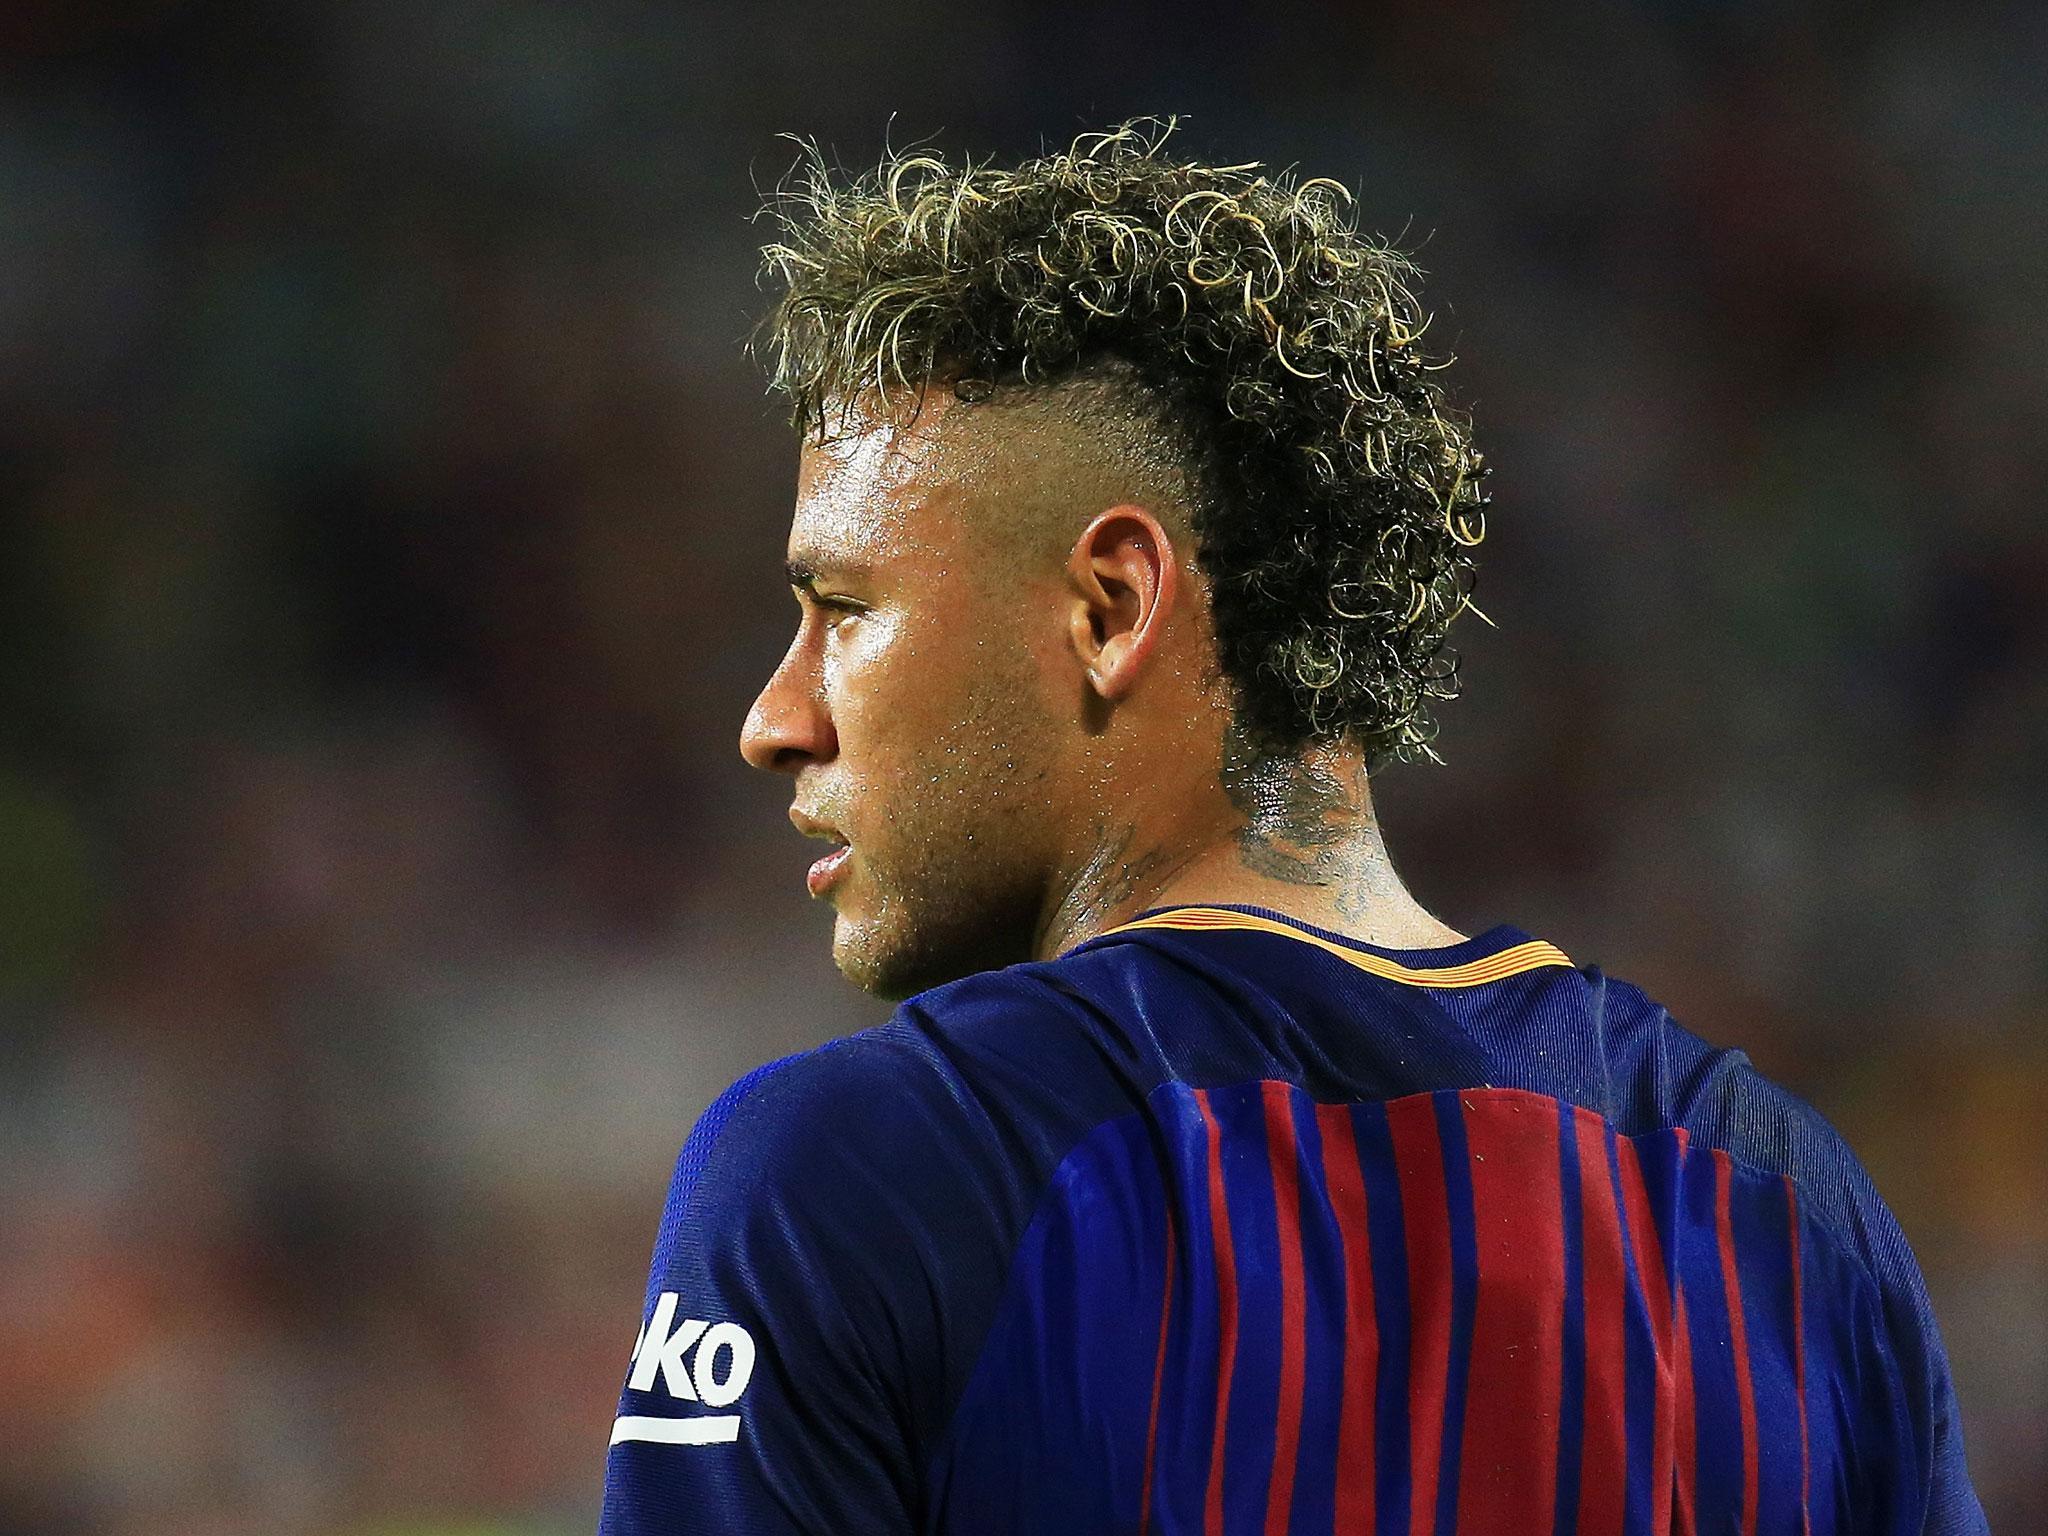 Neymar Haircut 2018 Back View - Wavy Haircut